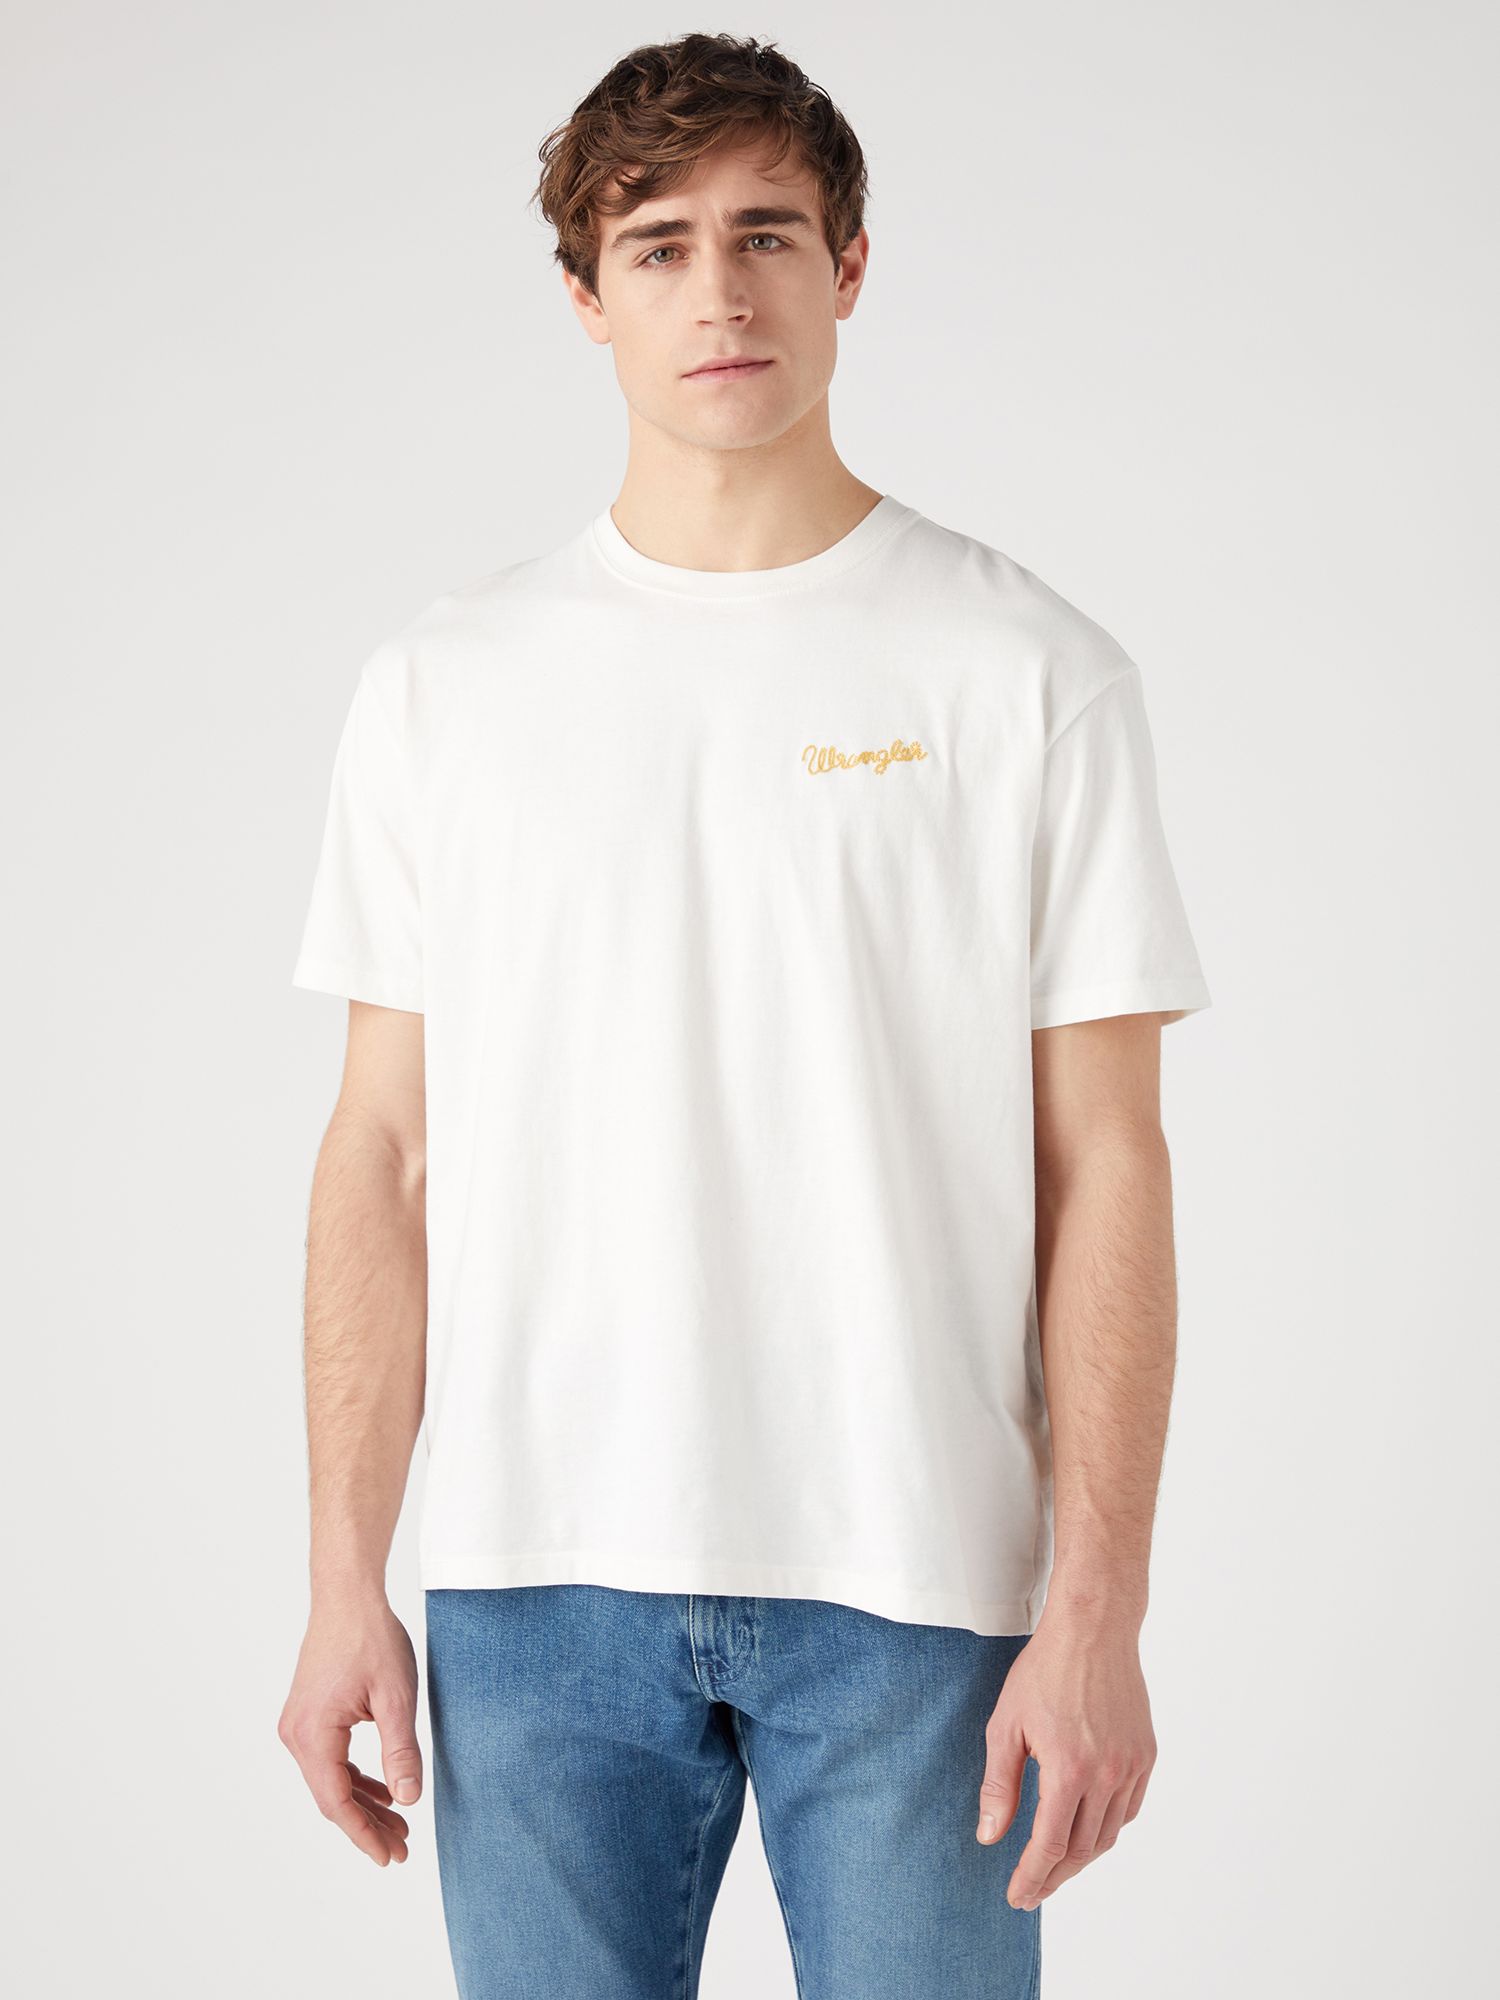 Wrangler Slogan Vintage T-Shirt, Worn White, S